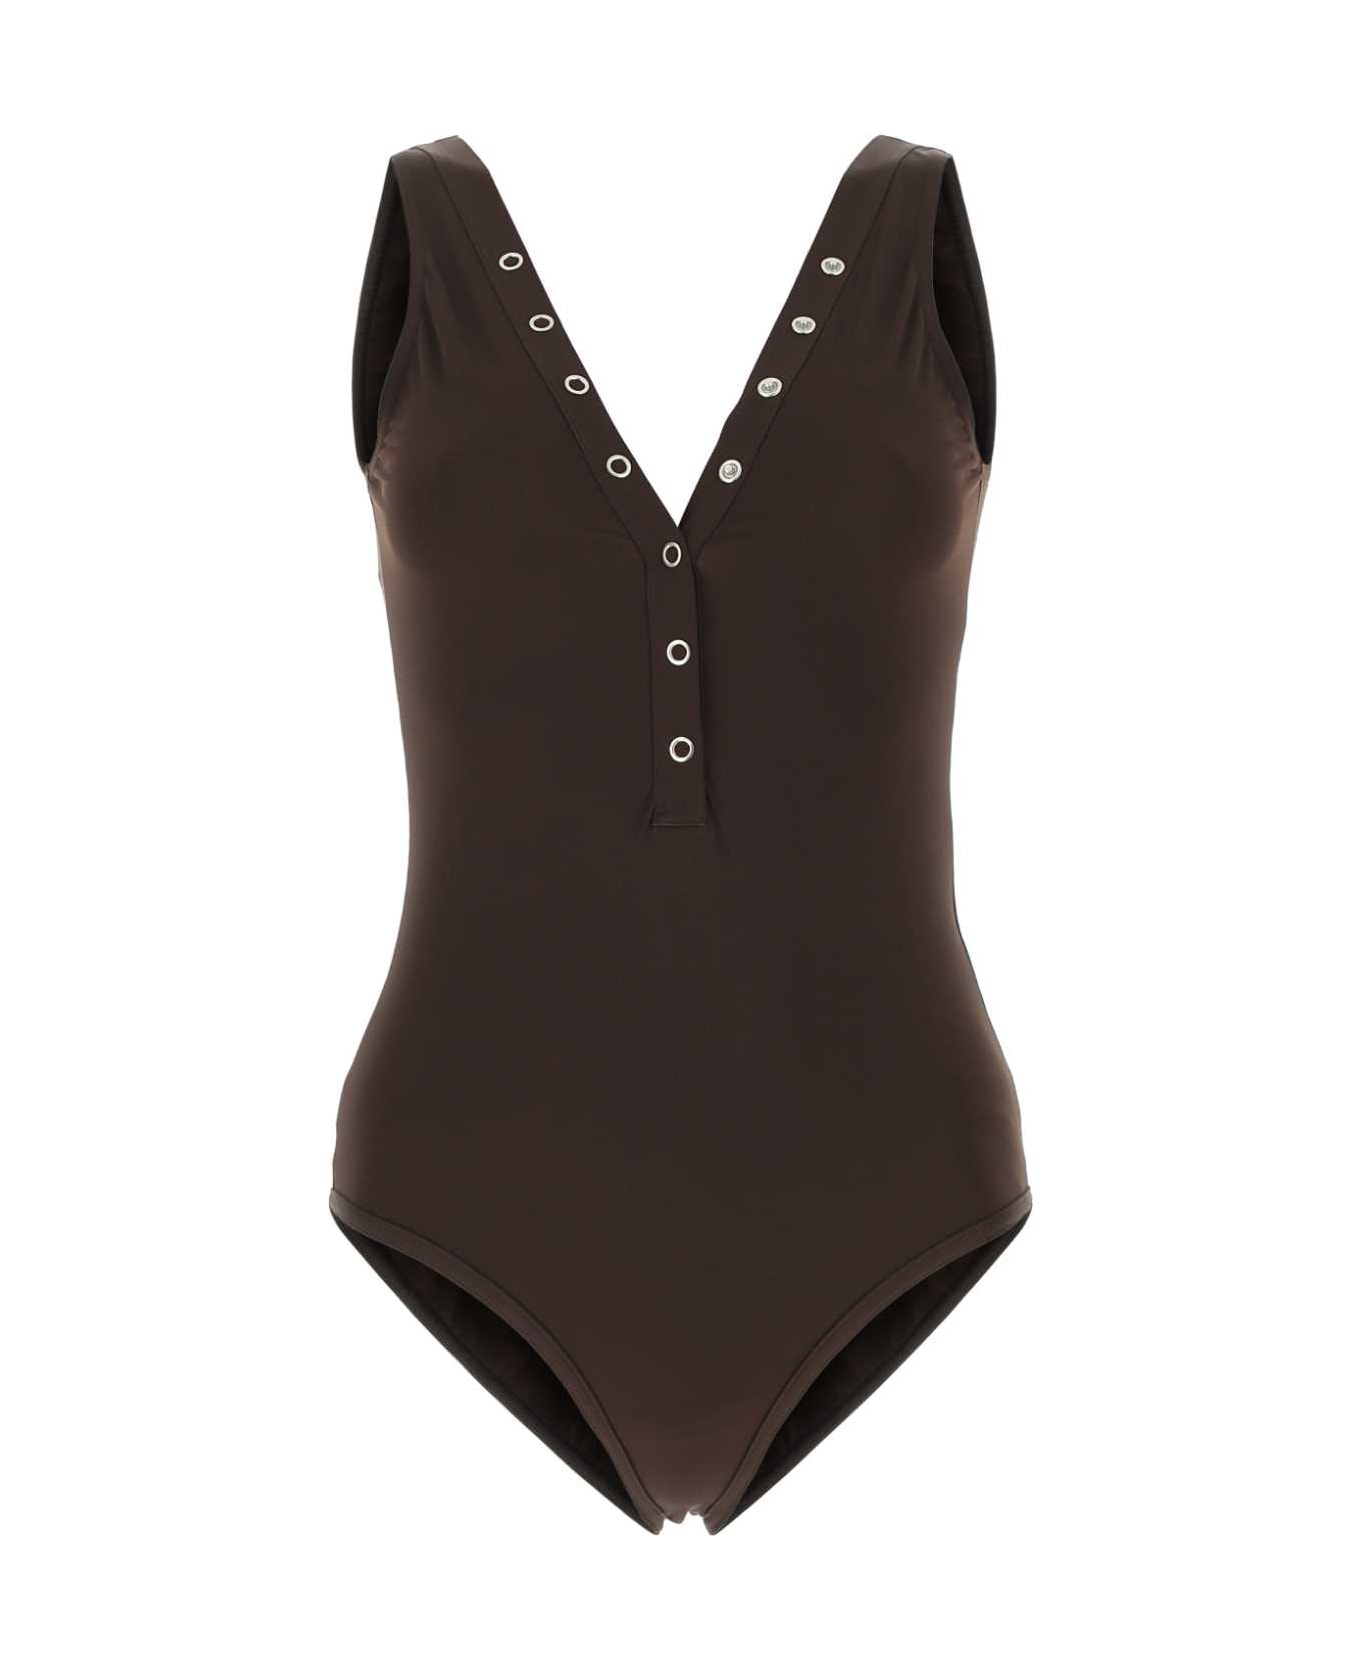 Bottega Veneta Chocolate Stretch Nylon Swimsuit - 2178